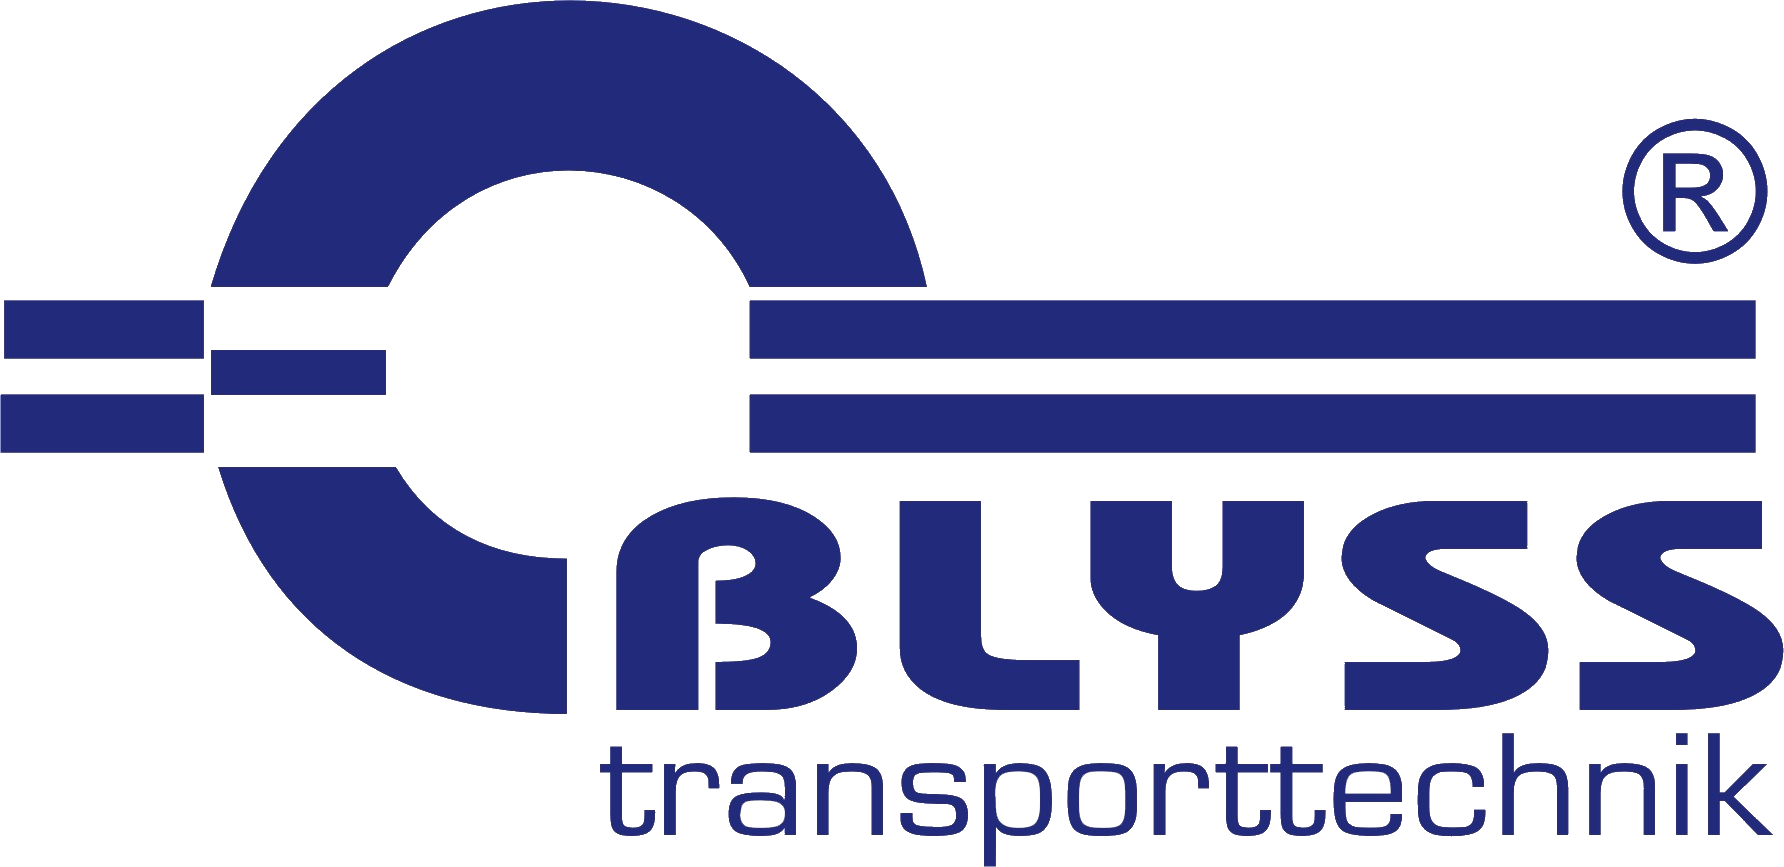 Logo des VfL Wolfsburg Partners Blyss Transporttechnik.